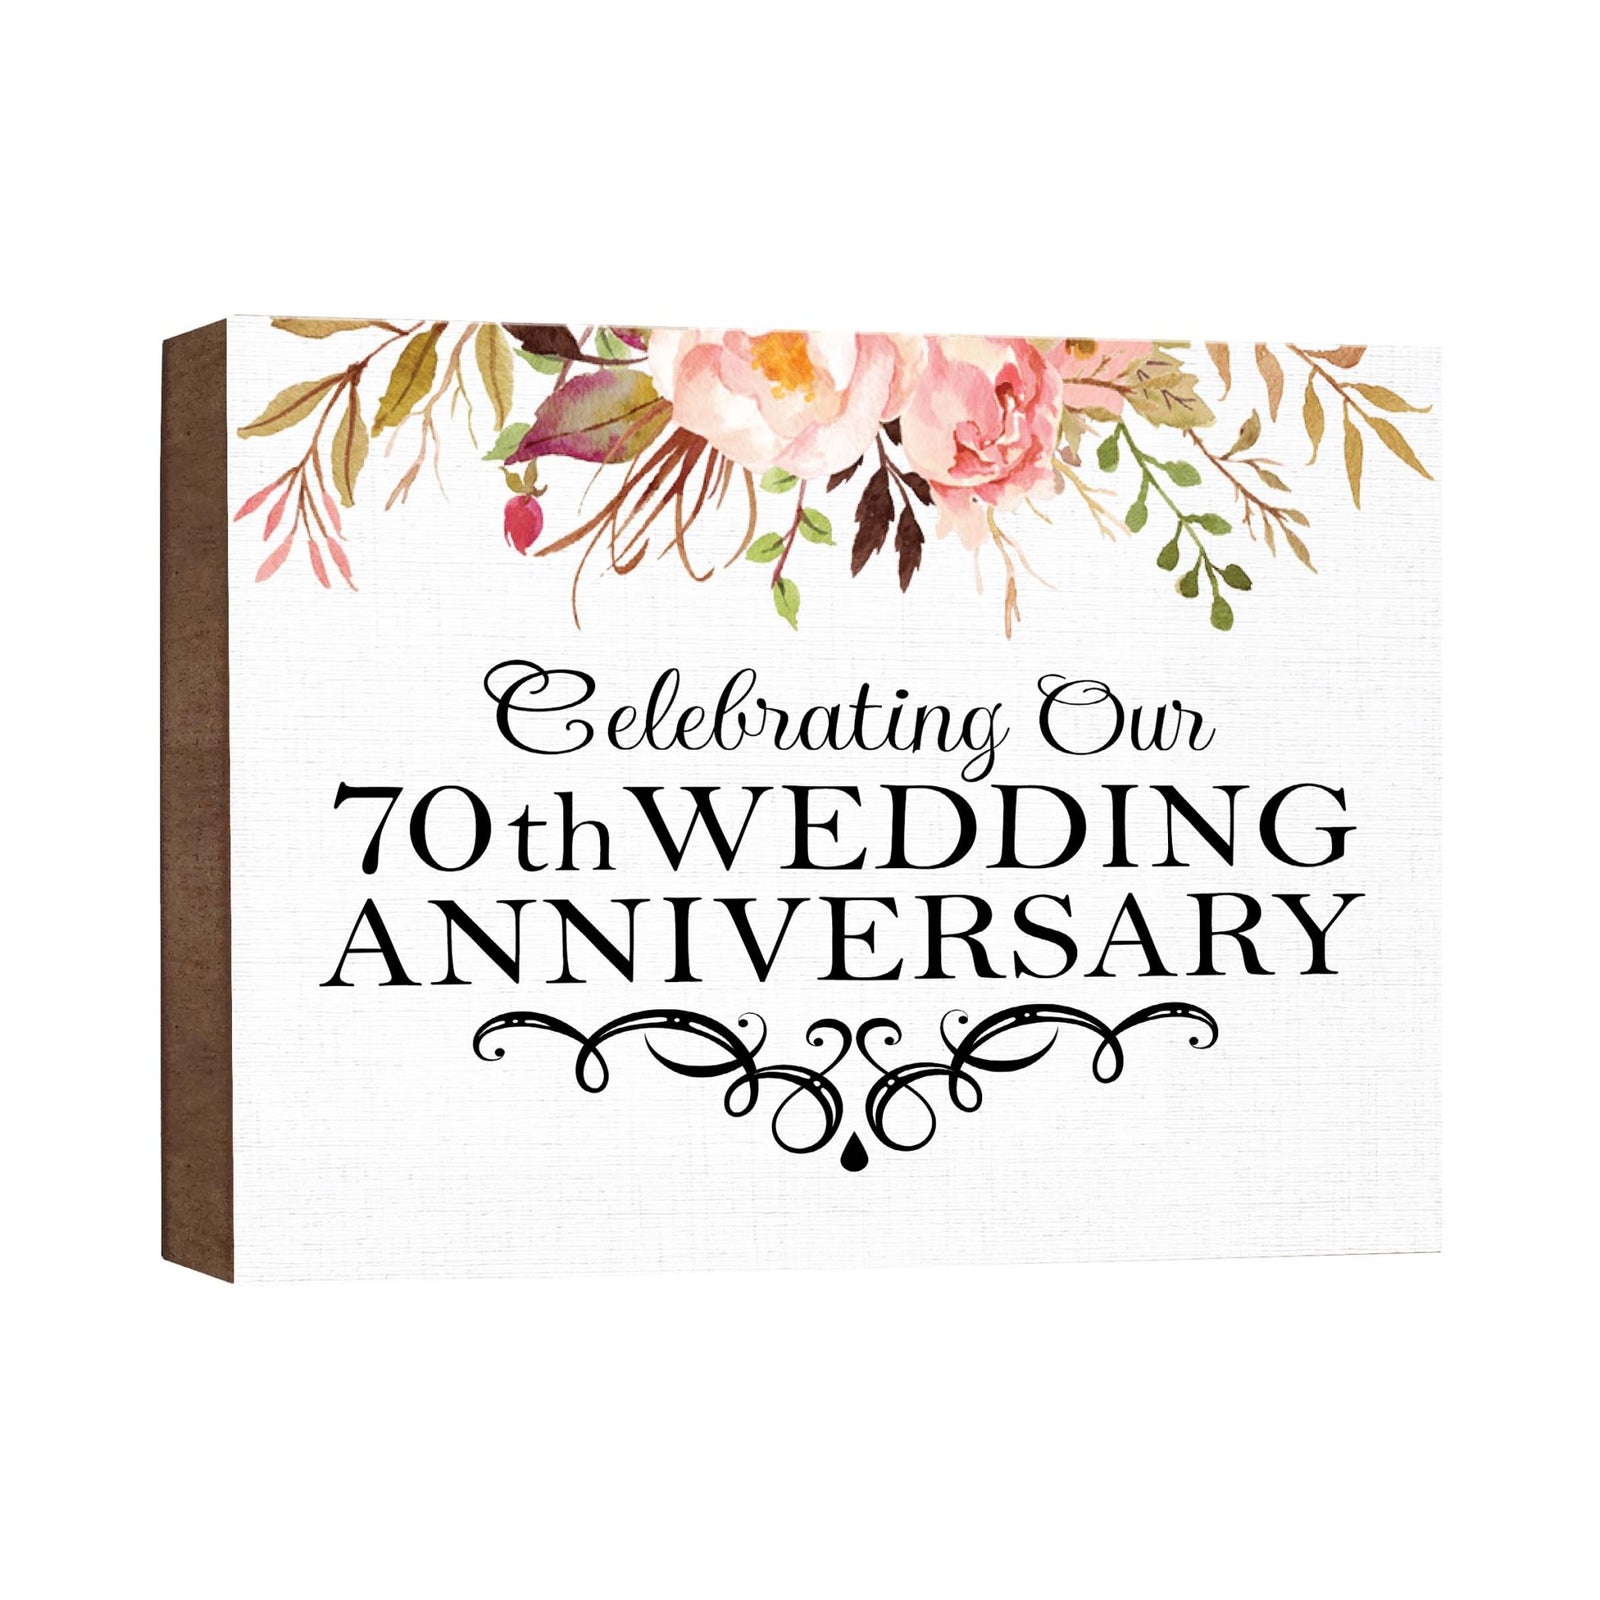 70th Wedding Anniversary Wall Plaque - Celebrating - LifeSong Milestones